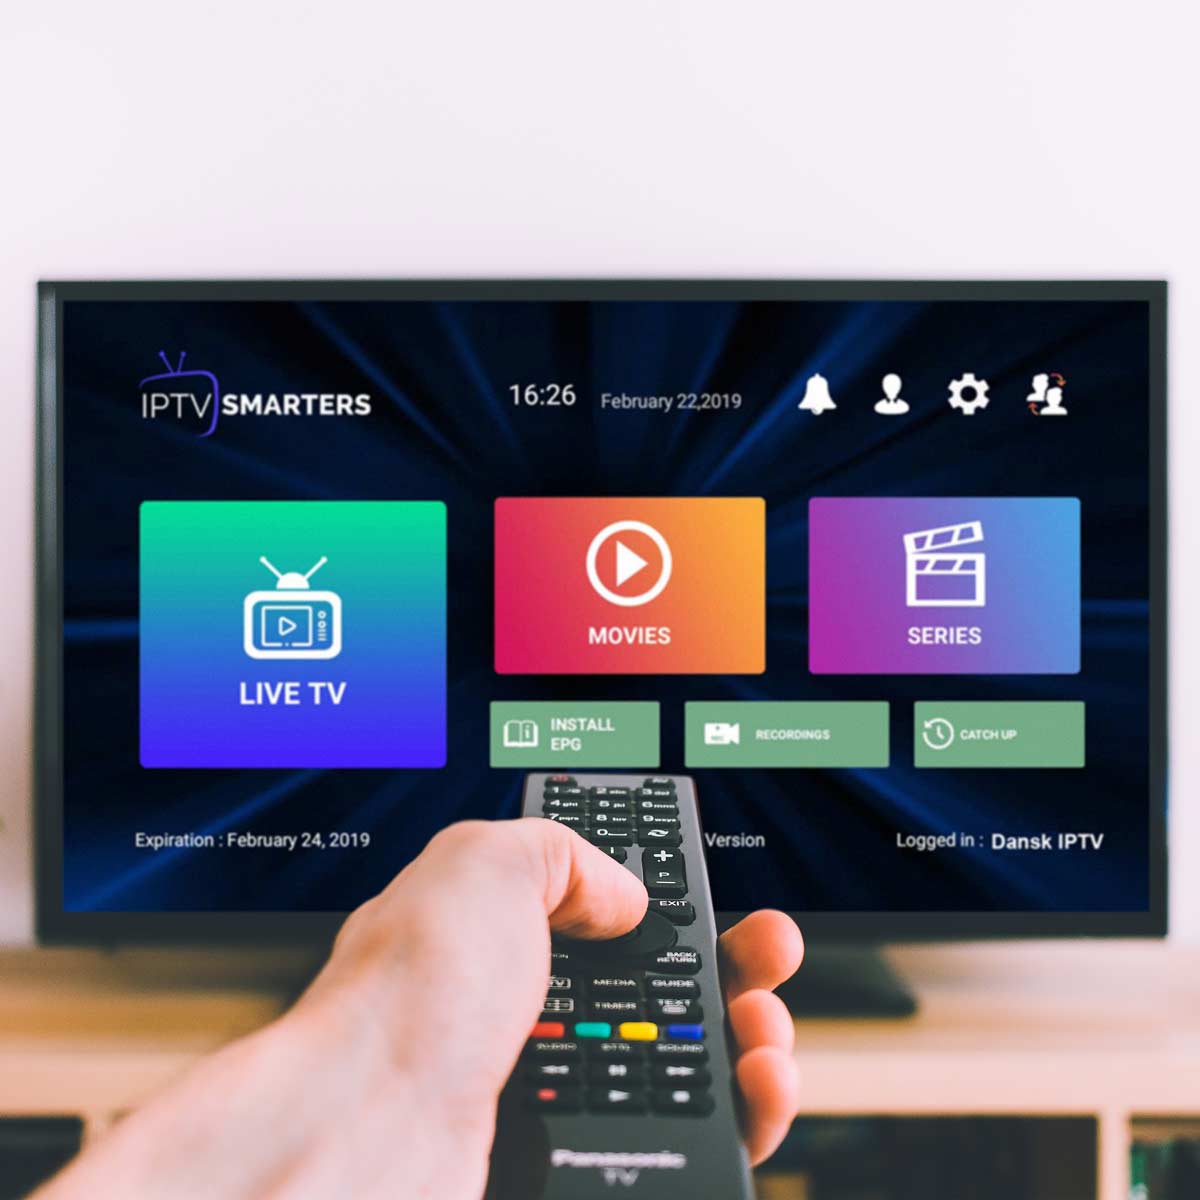 smartxiptv - Bästa IPTV-abonnemangsleverantören - SmartxIPTV